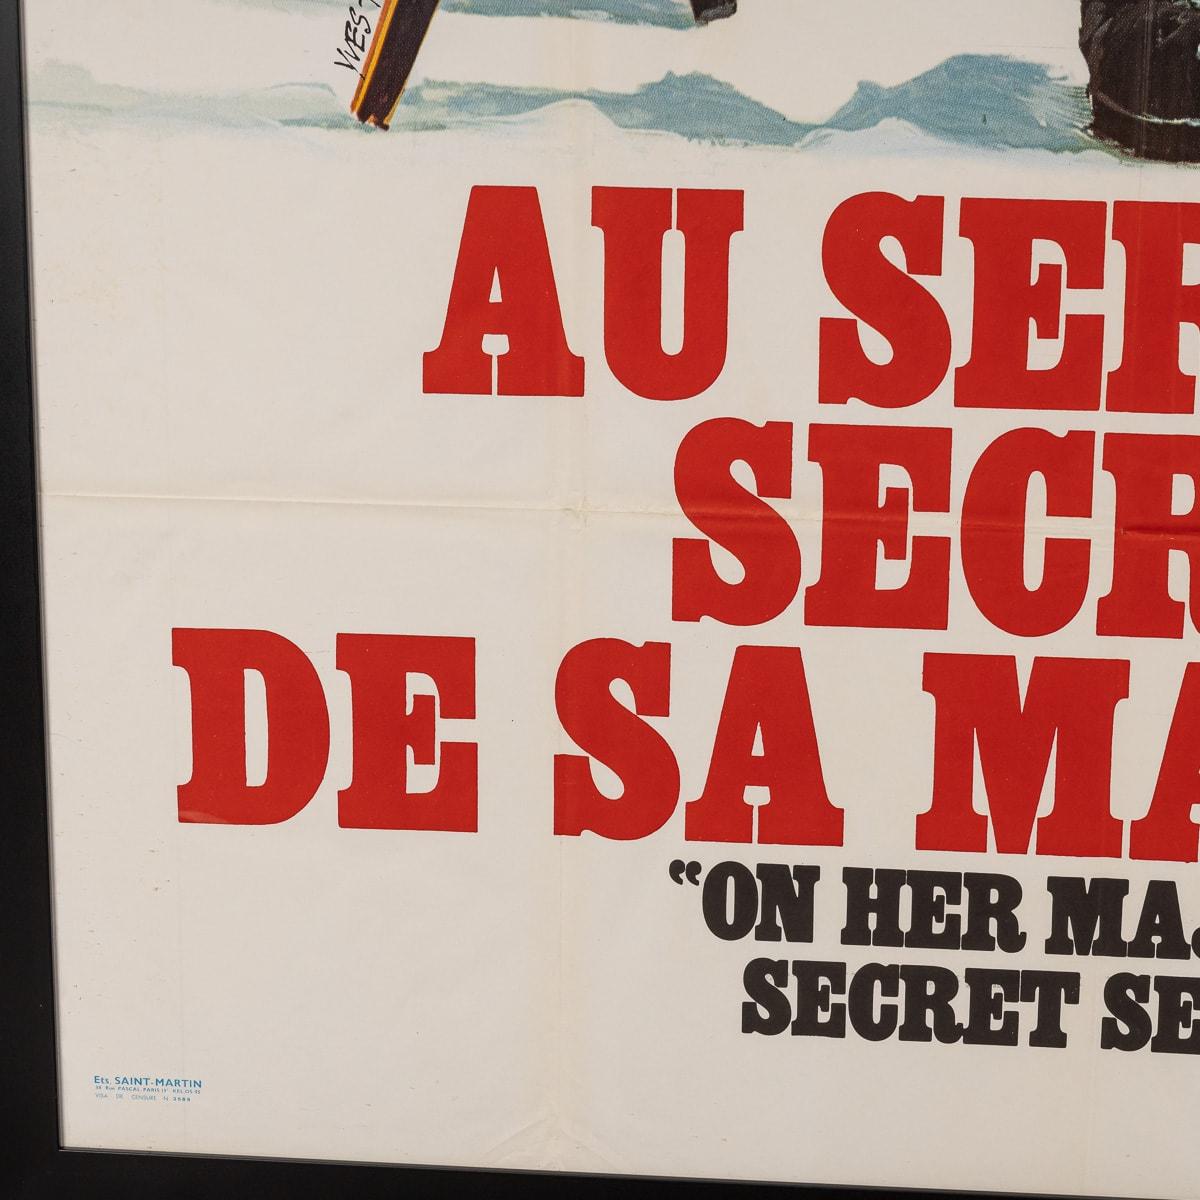 Original French Release James Bond On Her Majesty's Secret Service Poster c.1969 14